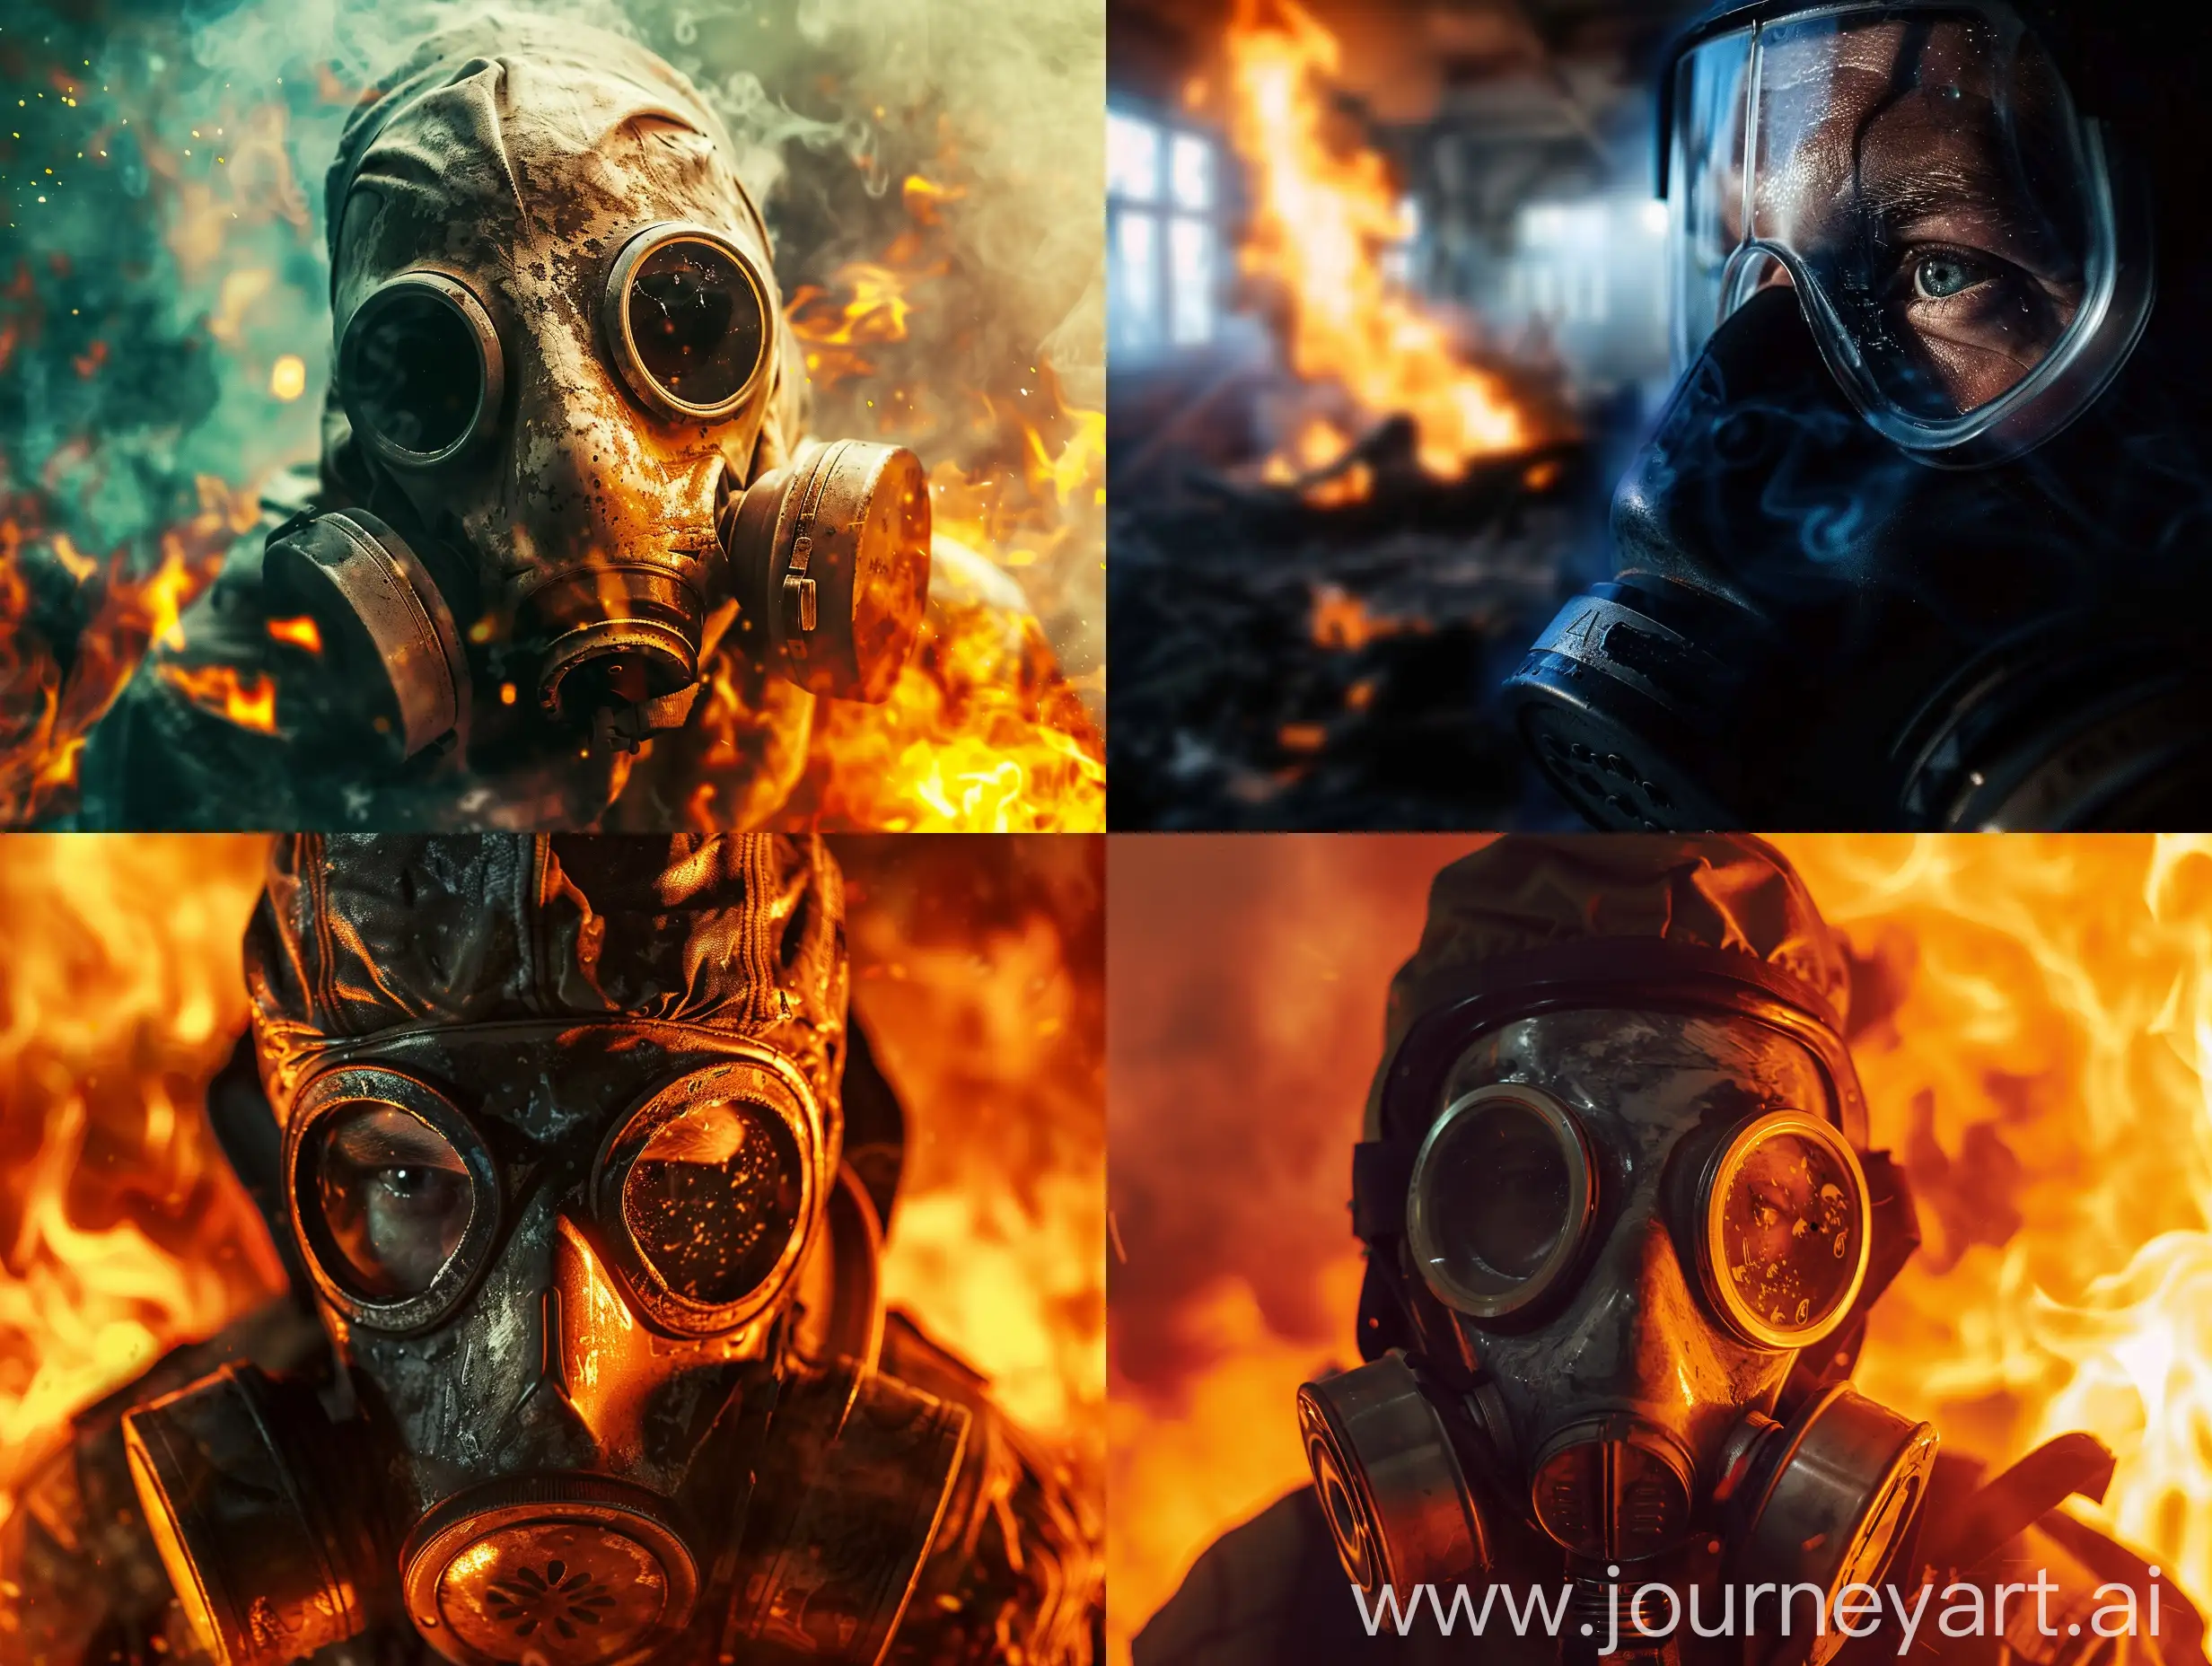 Stalker-in-Gas-Mask-Amidst-Haunting-Chernobyl-Landscape